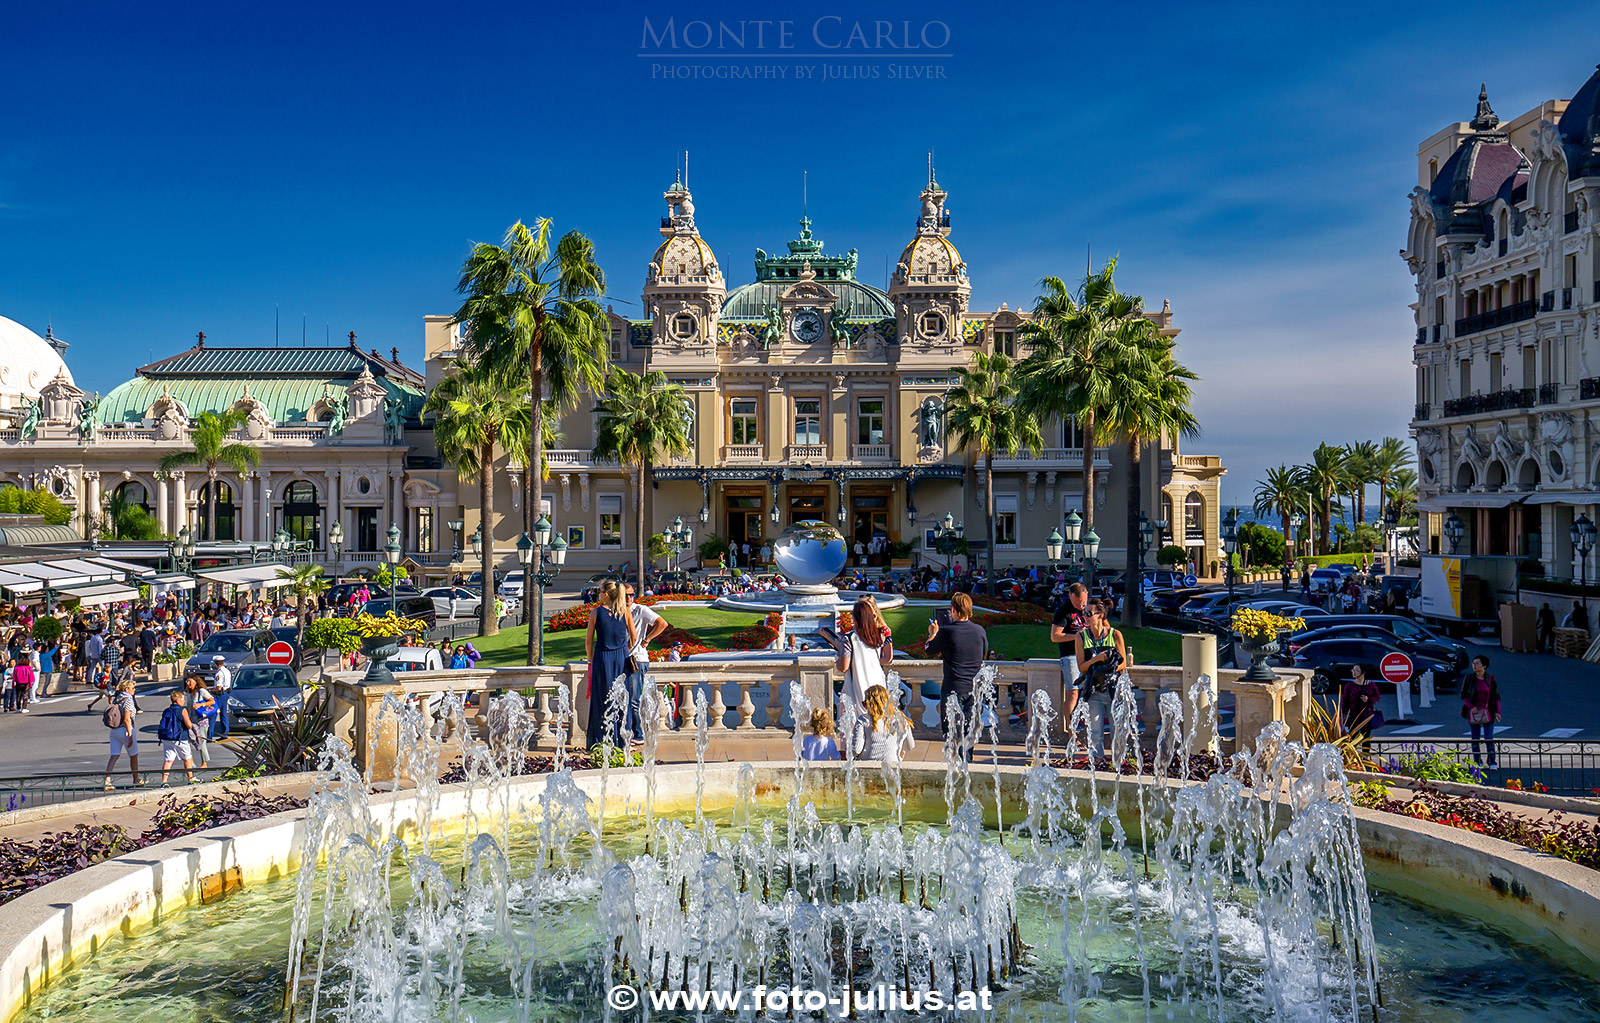 Monte_Carlo_015a.jpg, 752kB